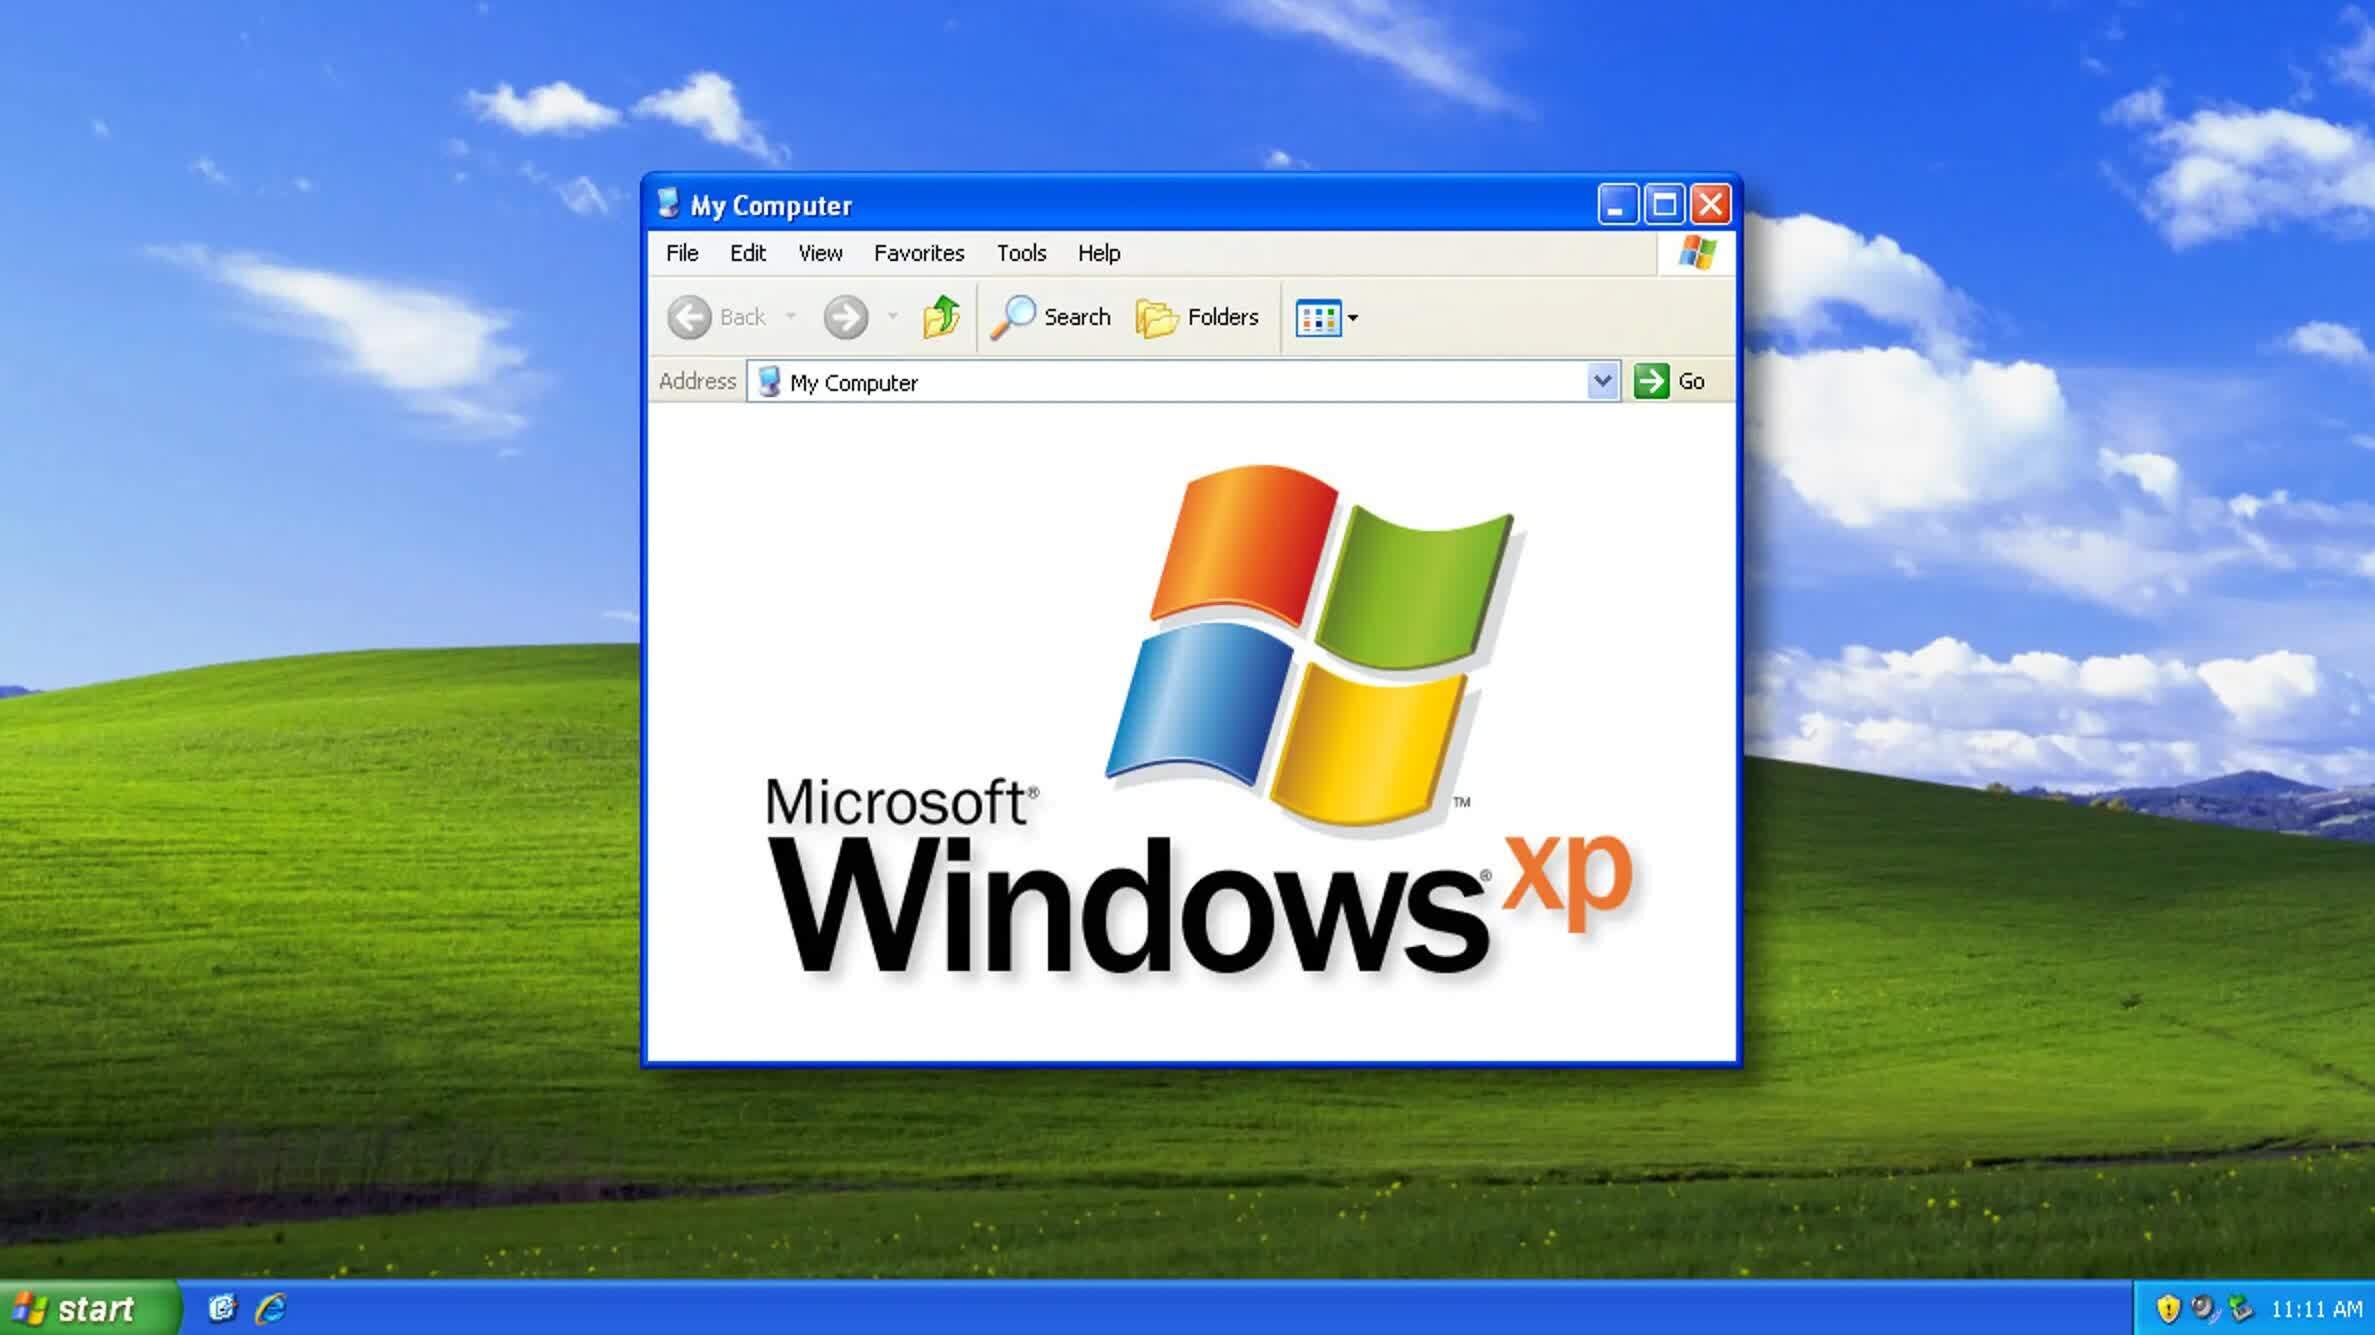   Windows XP        